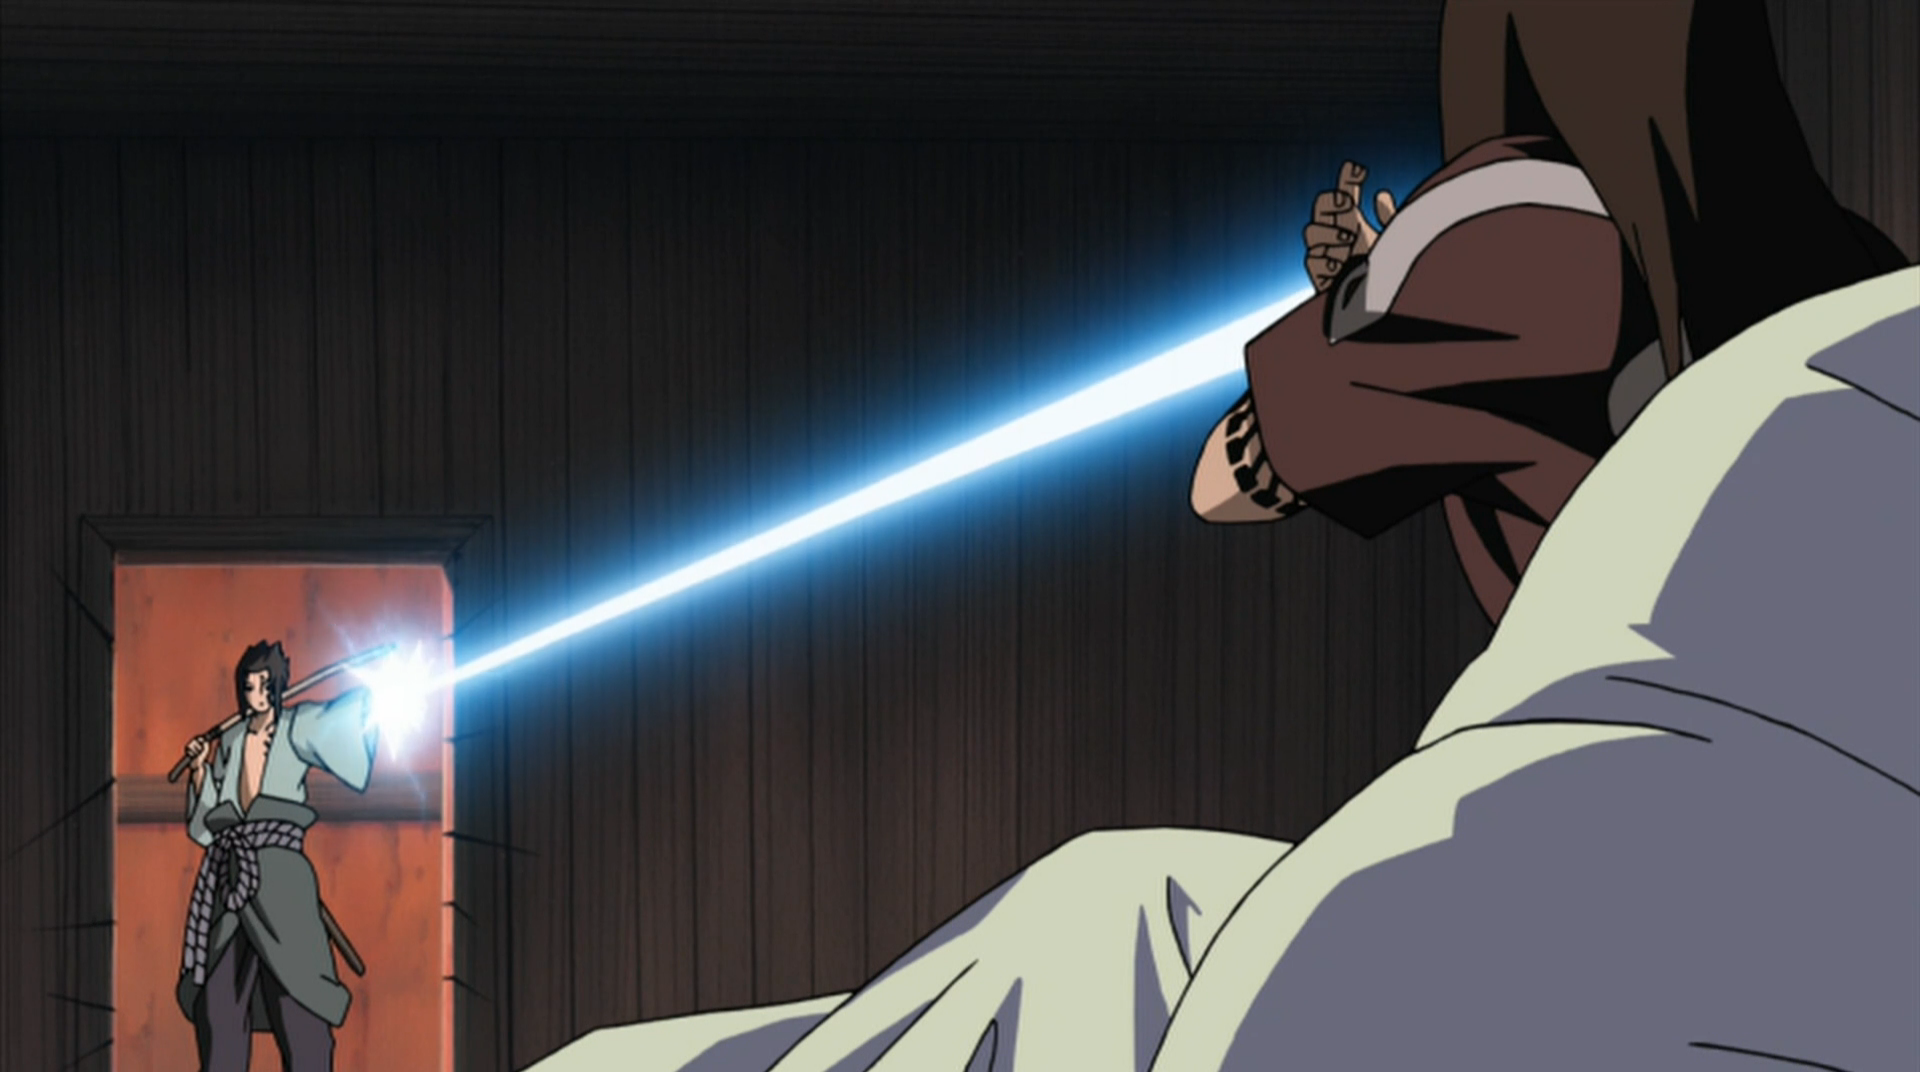 Sasuke attacked Itachi until he was knocked unconscious by Itachi